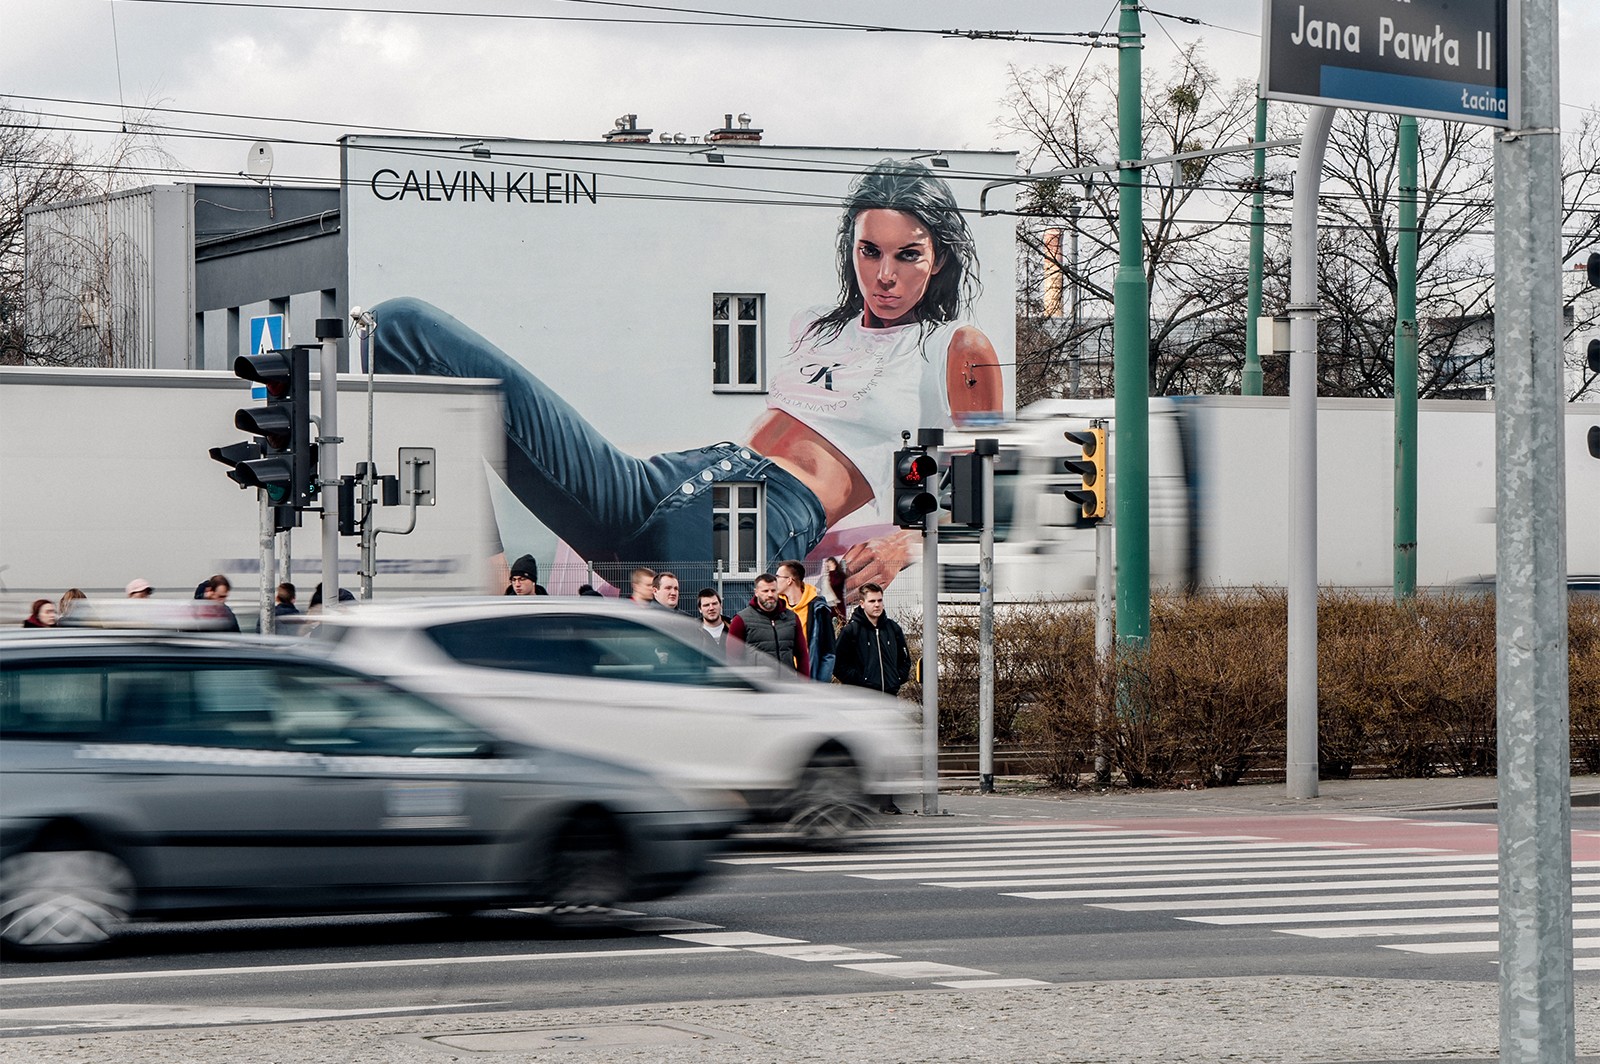  Large format, handpainted advertising in Poznań | Calvin Klein x Kendall Jenner | Portfolio